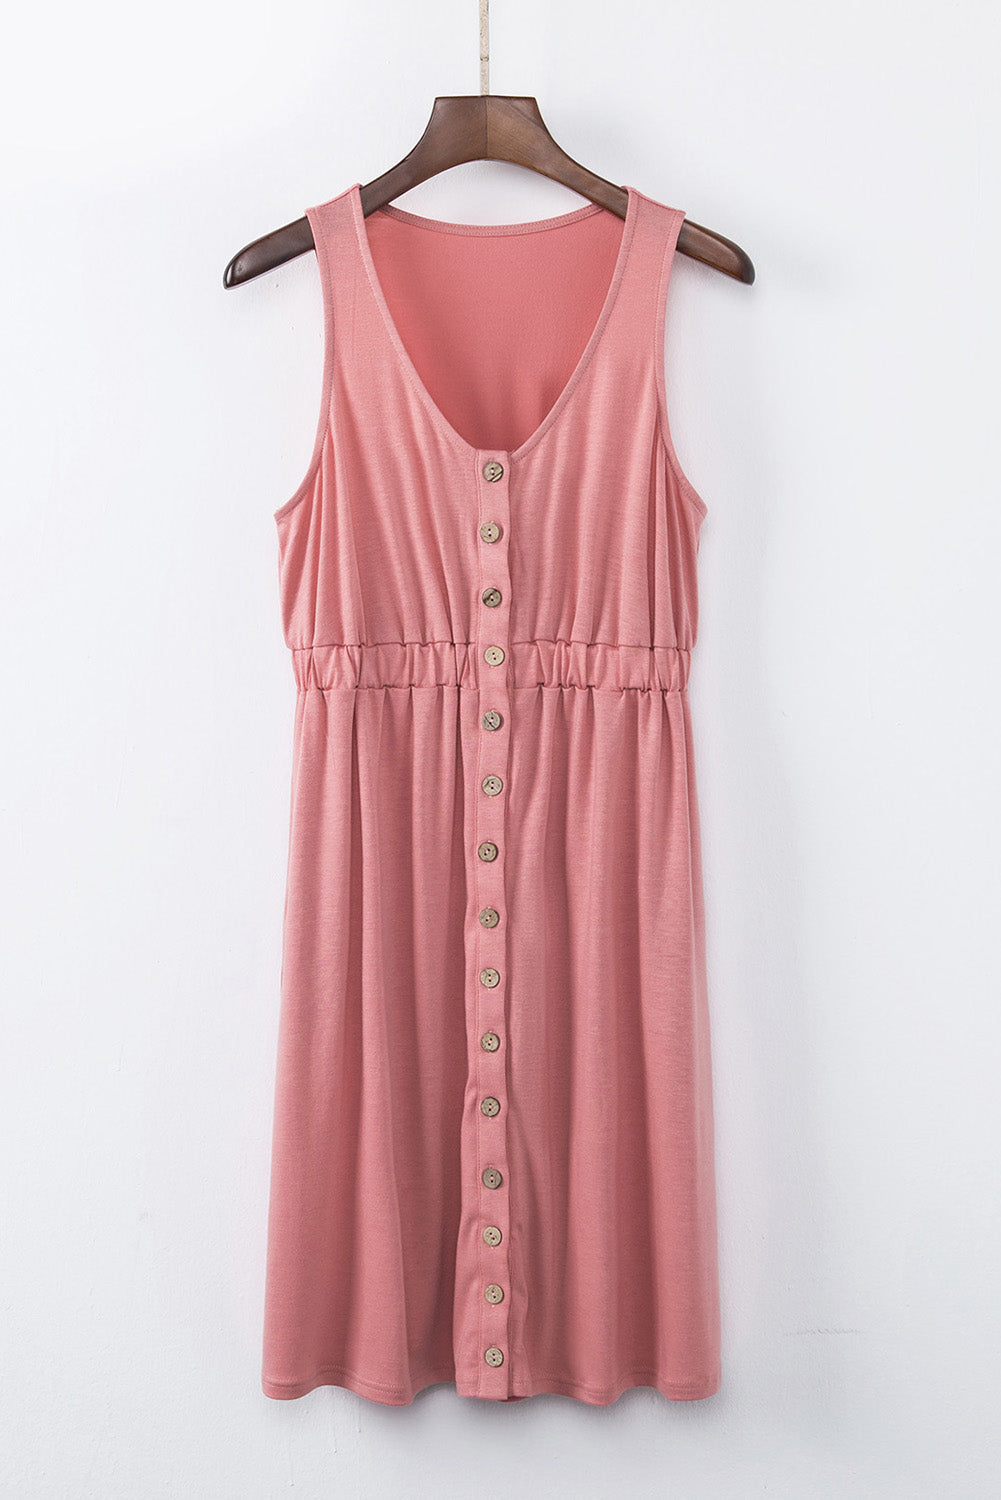 Sleeveless Button Down Dress (12 colors!)